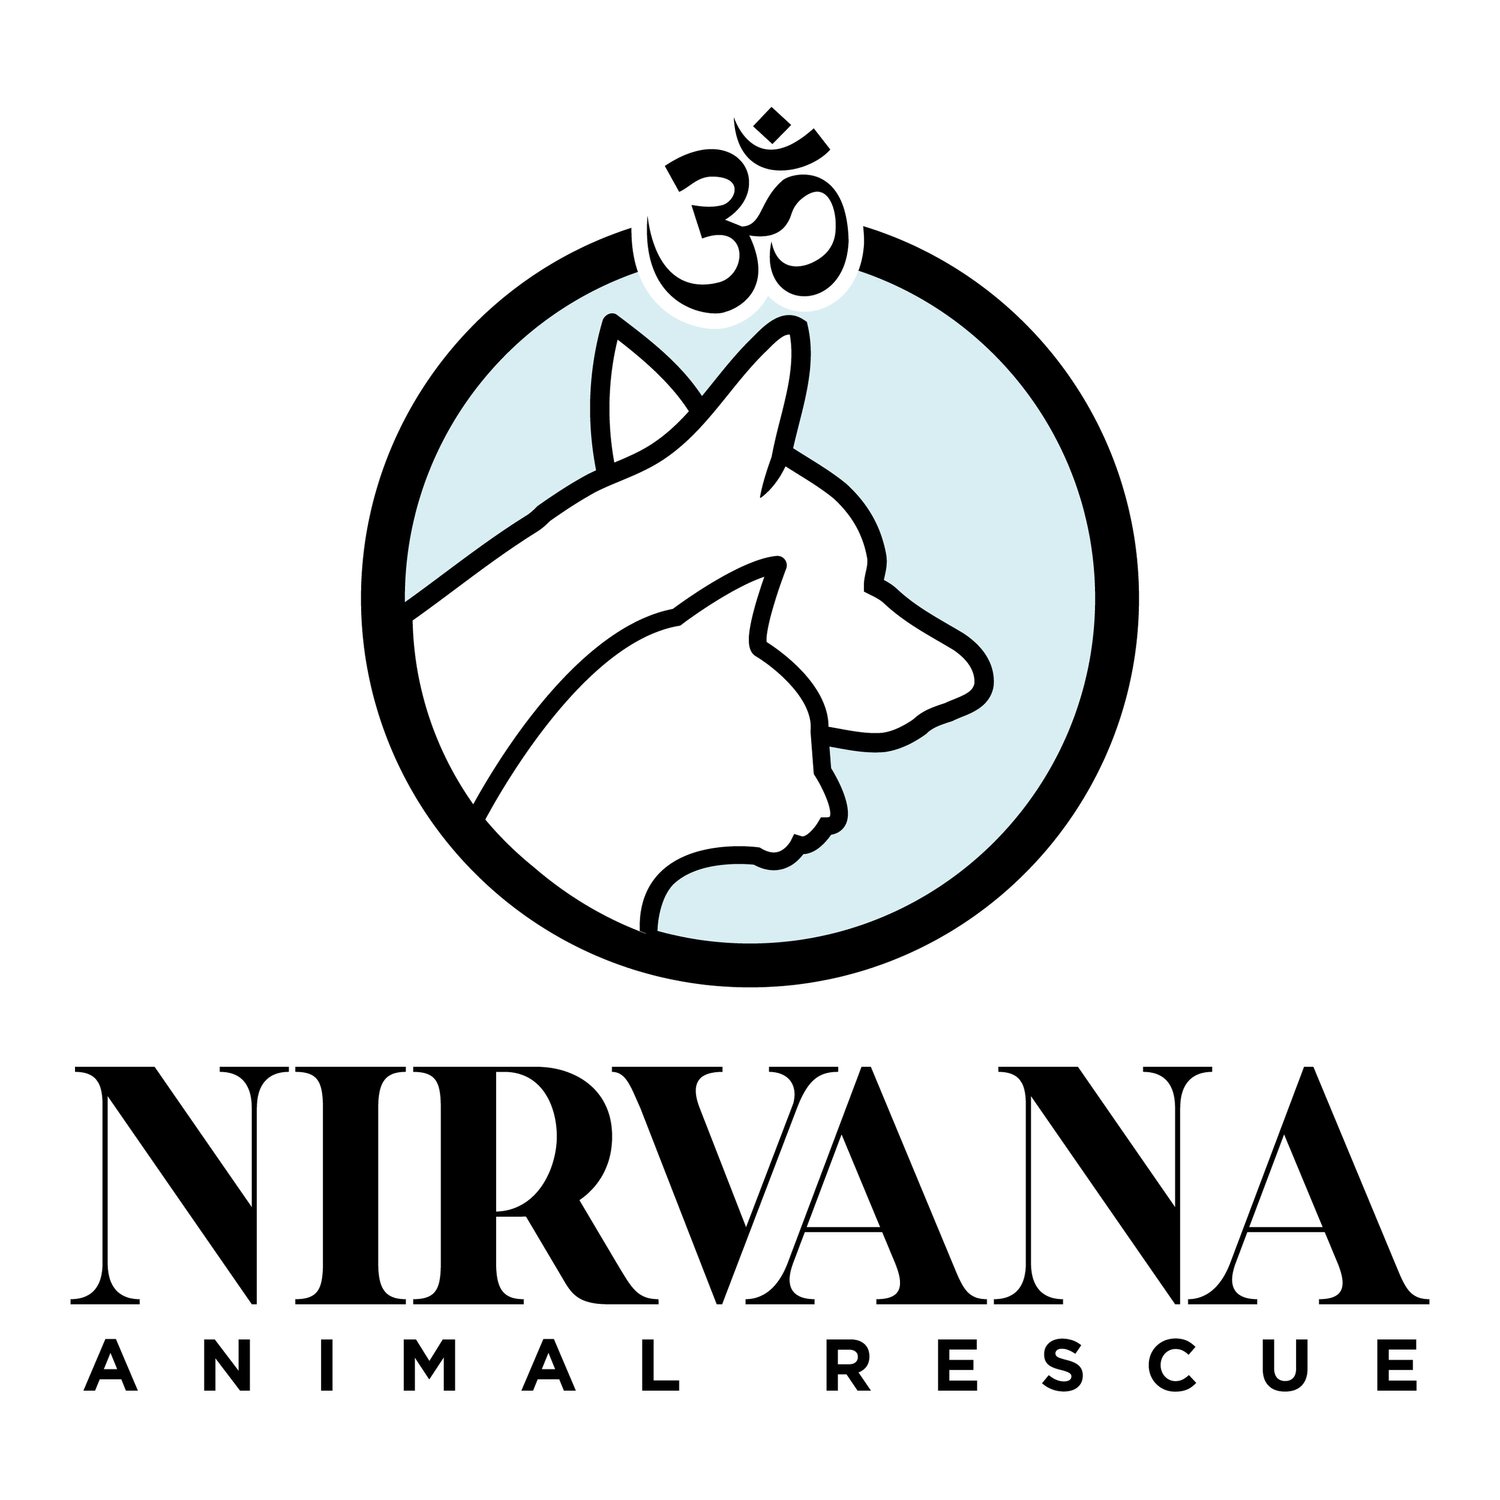 Nirvana Animal Rescue